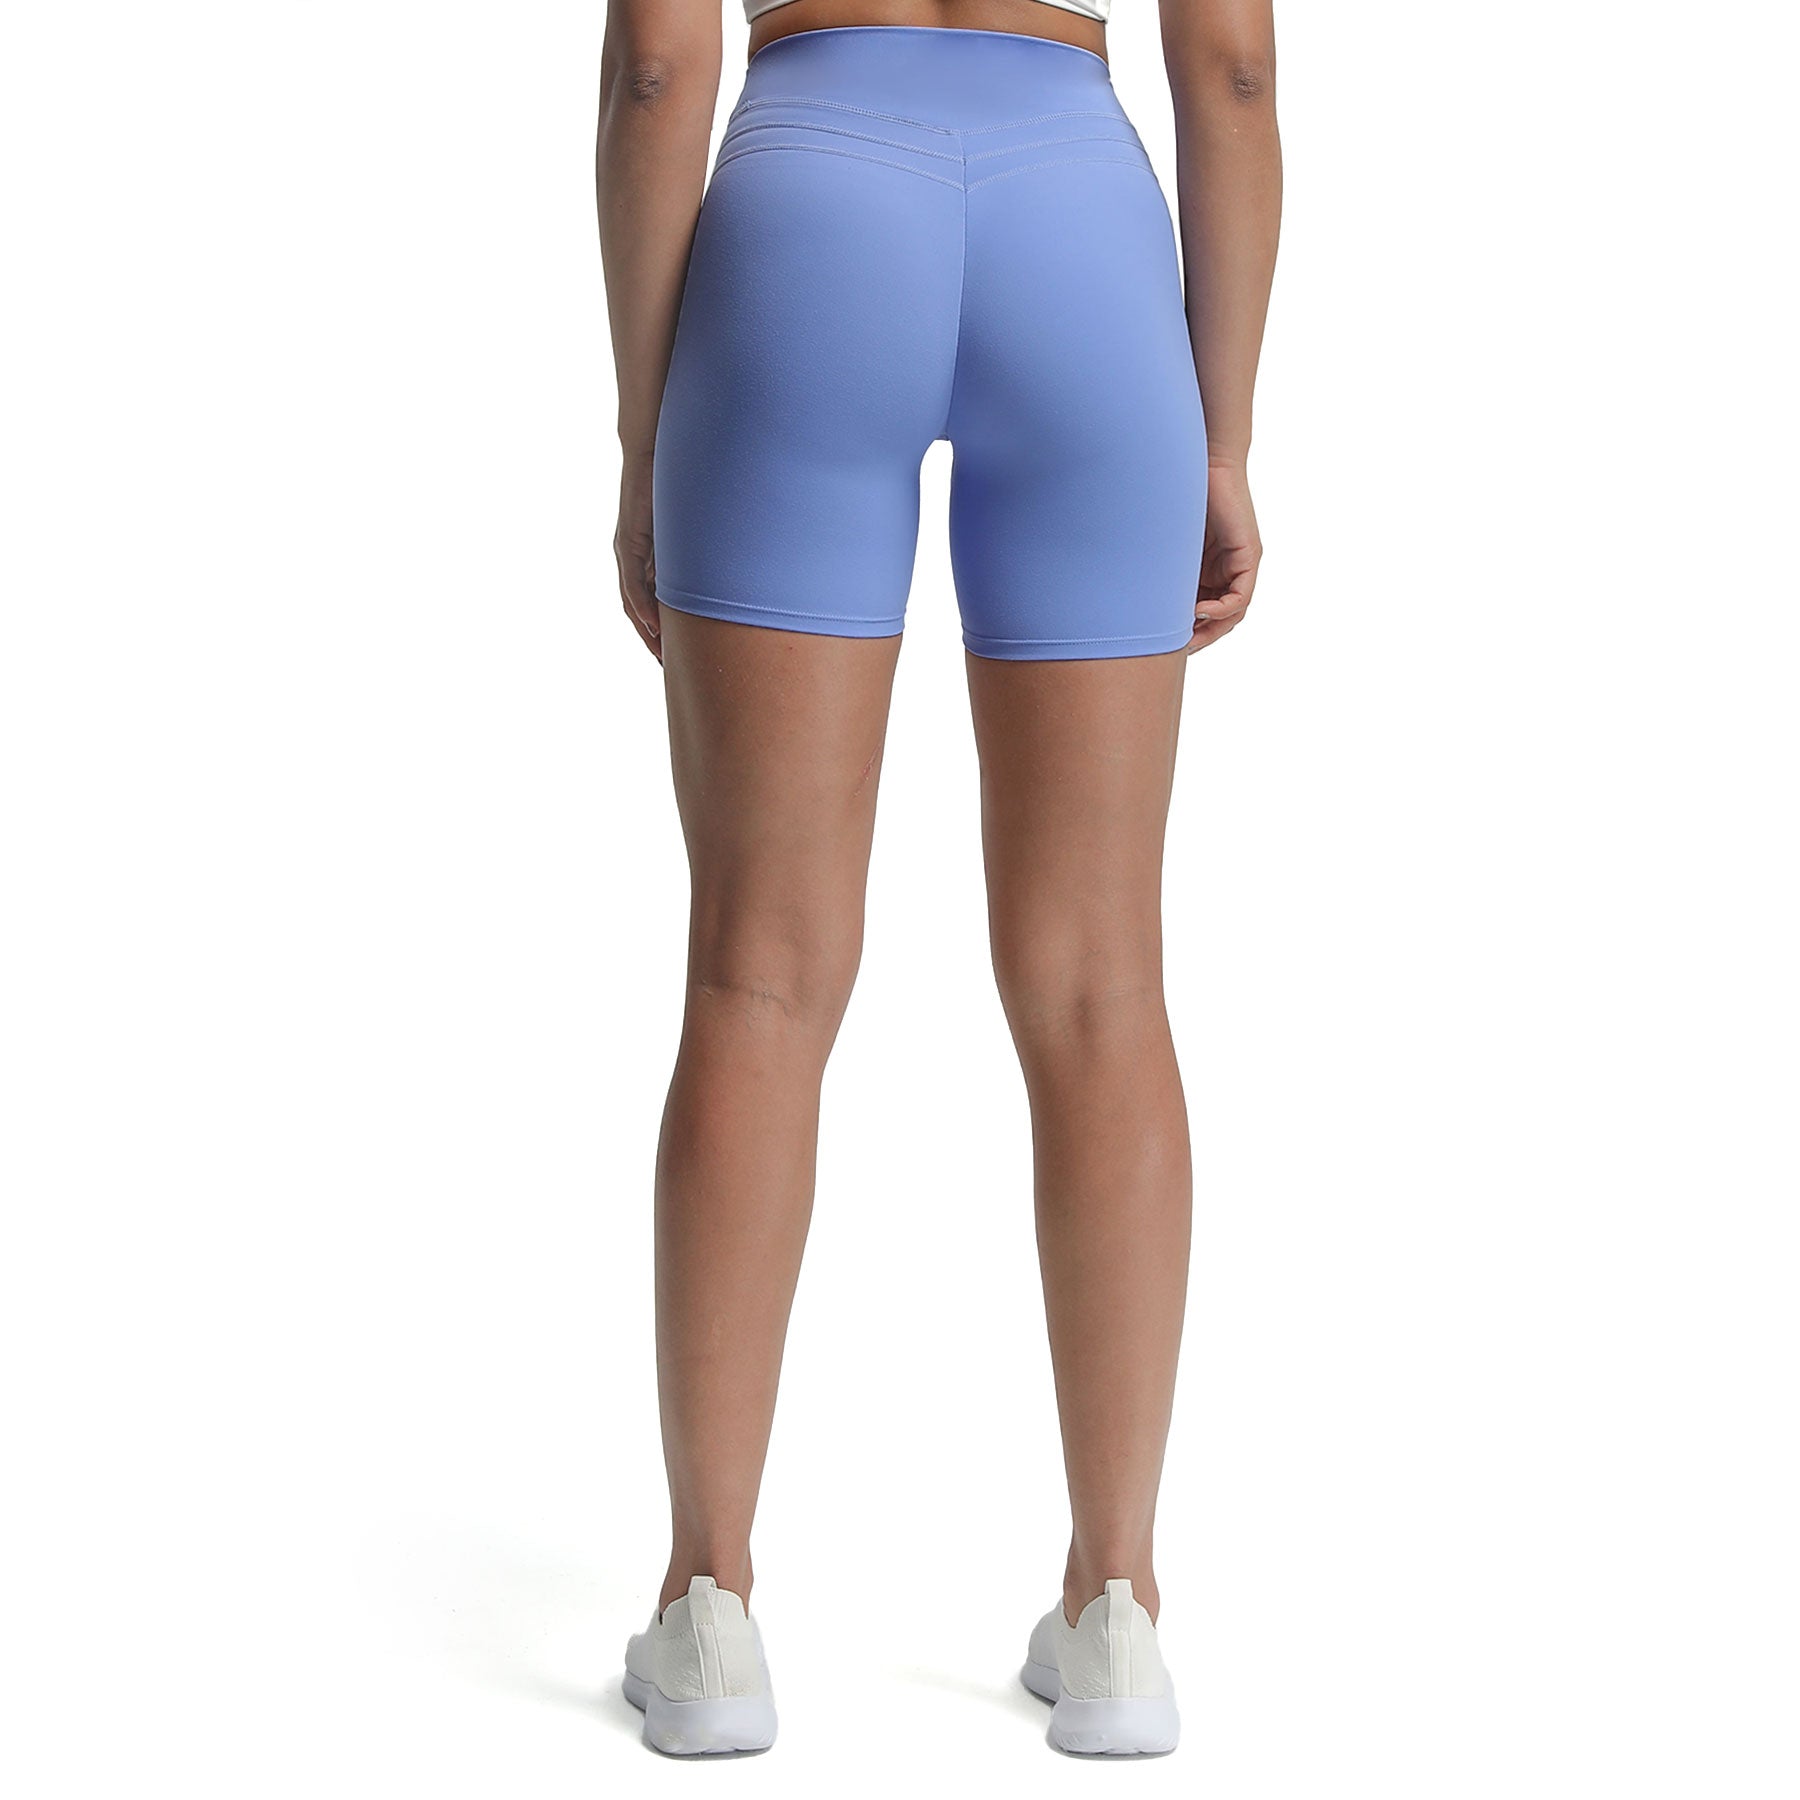 Aoxjox "Luna" Soft Scrunch Shorts